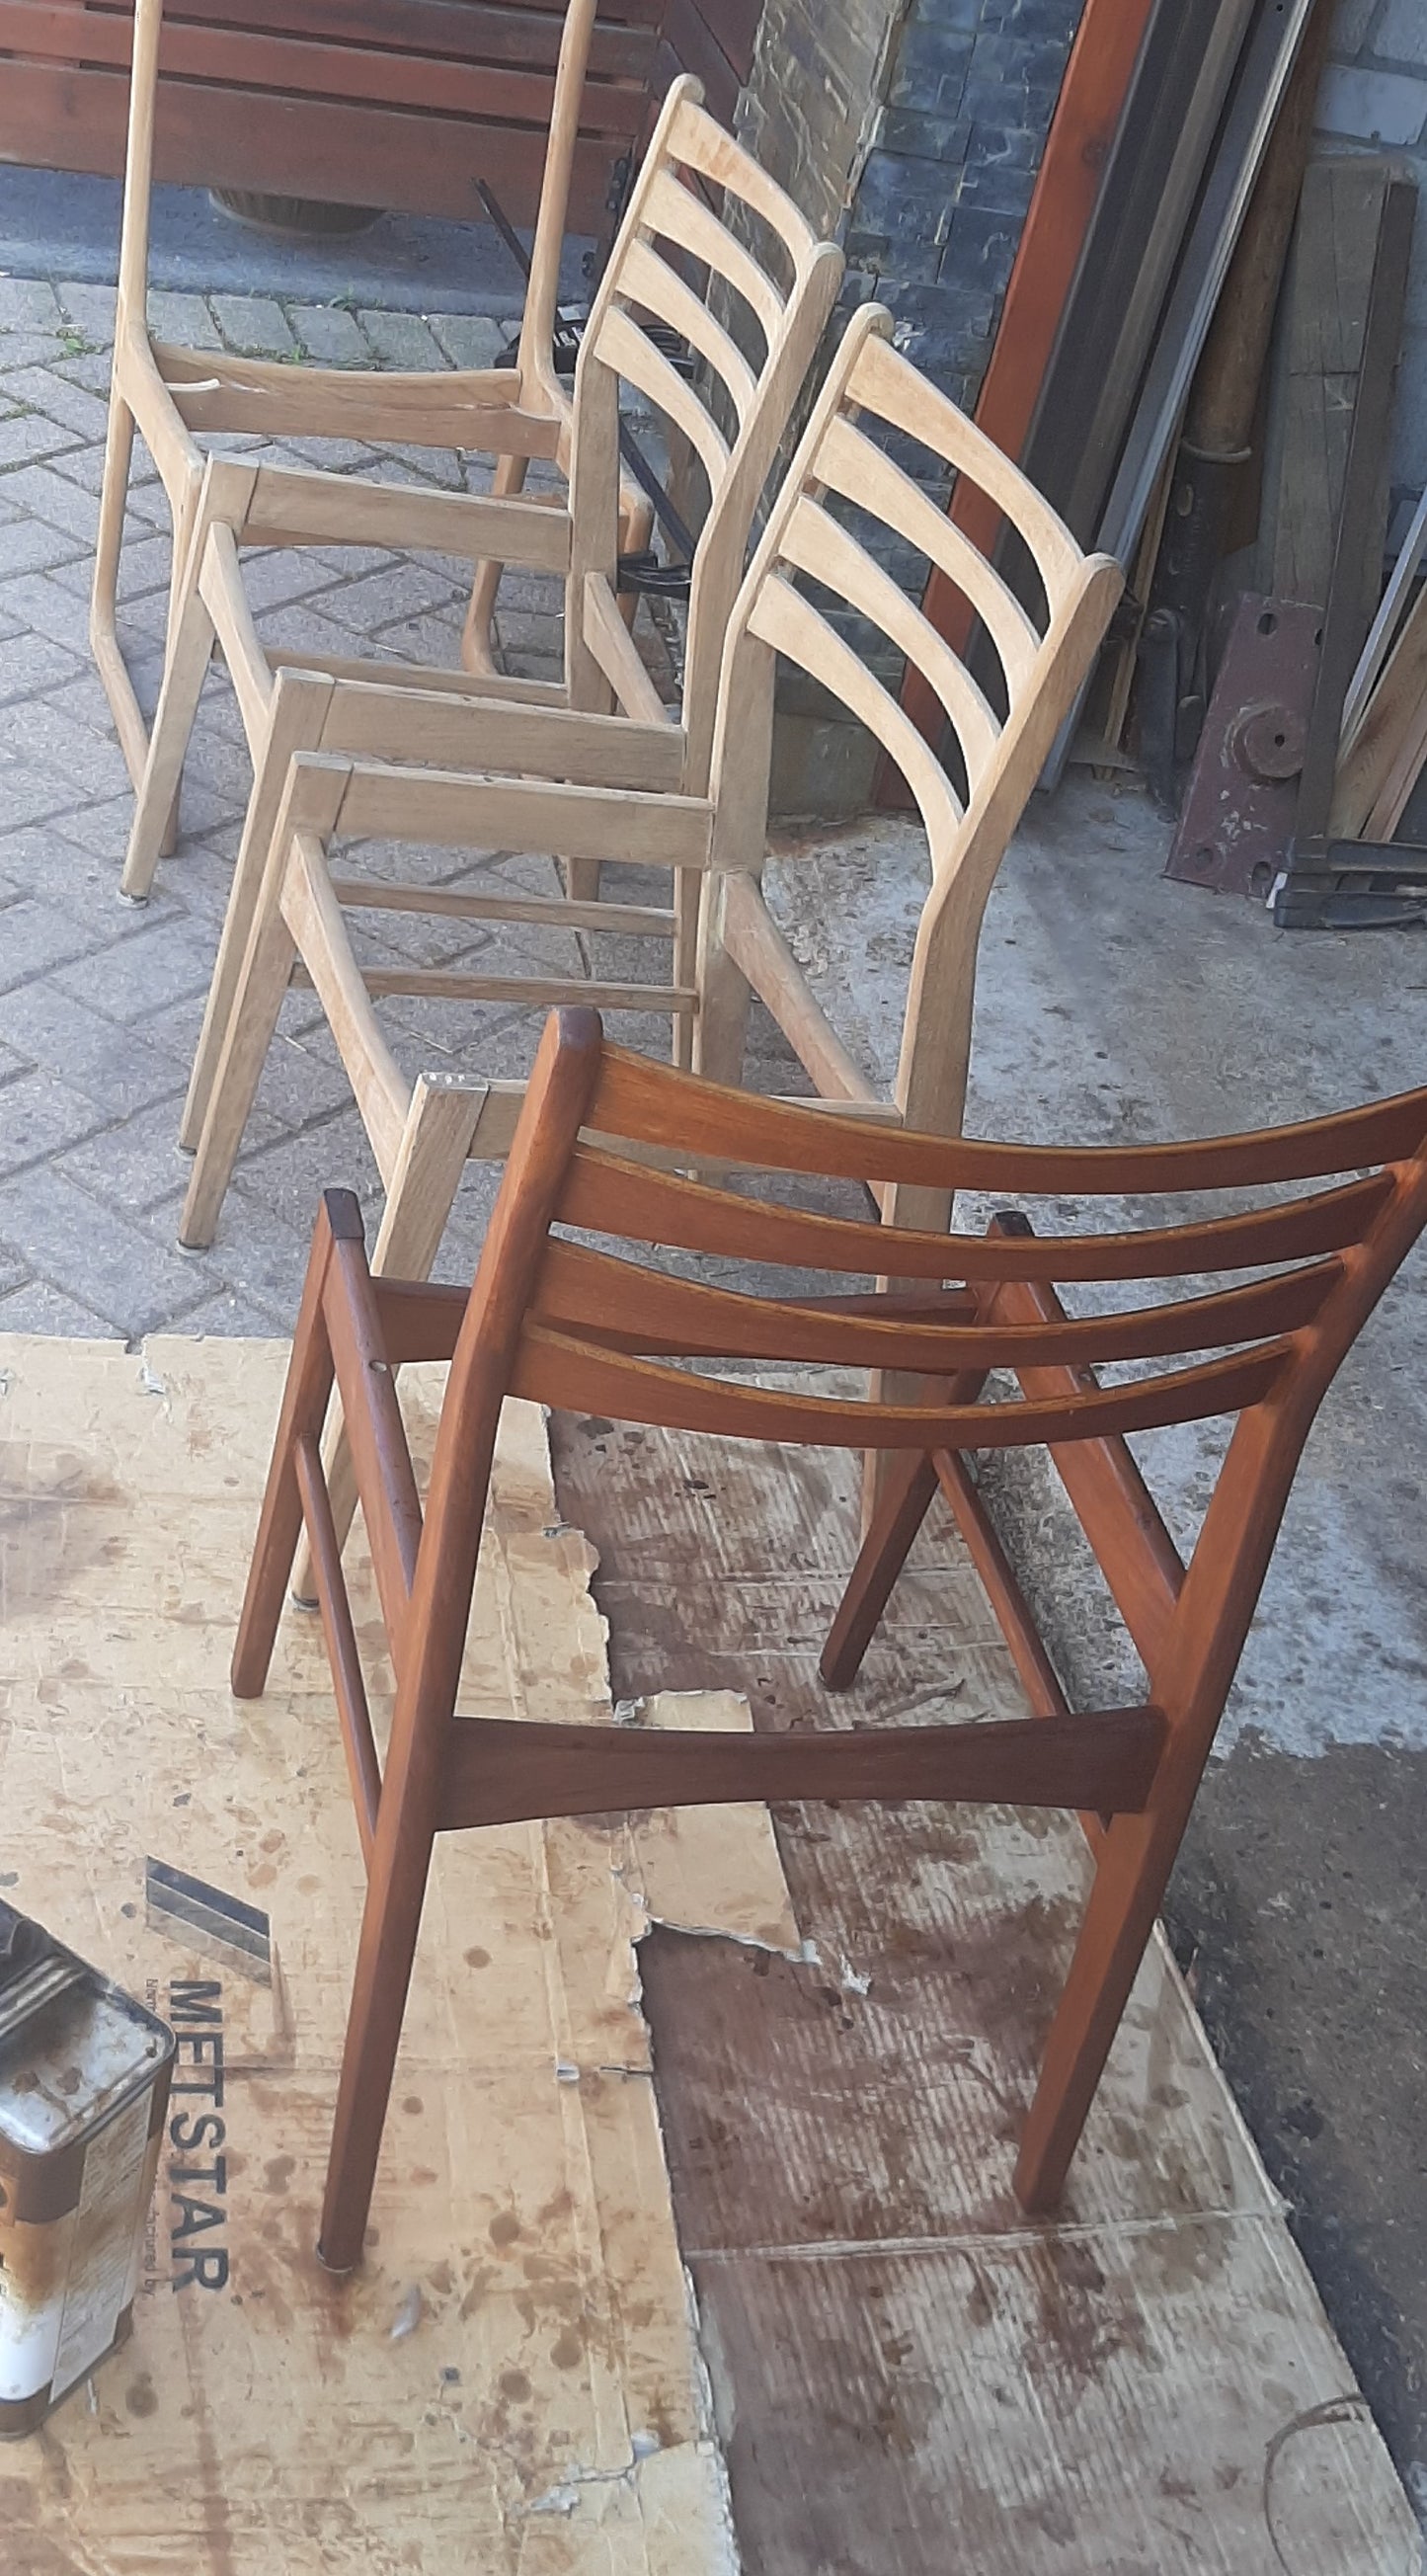 4 REFINISHED REUPHOLSTERED Danish Mid Century Modern Teak Chairs Ladder Back